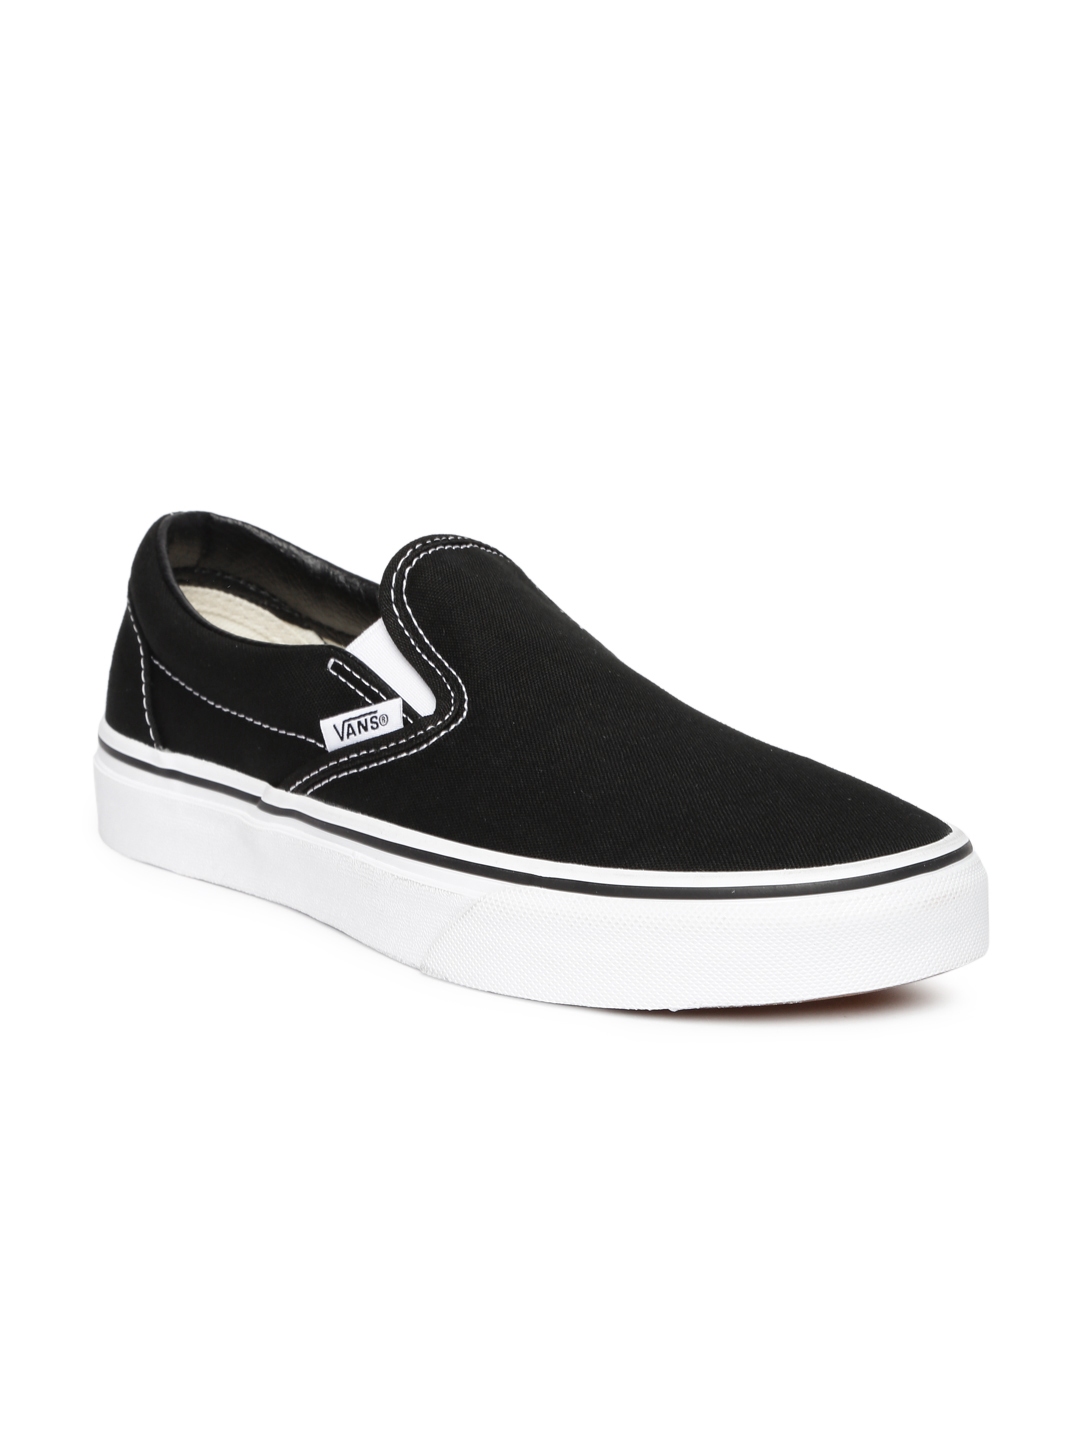 Buy Vans Unisex Black Solid Regular Slip On Sneakers - Casual Shoes for ...